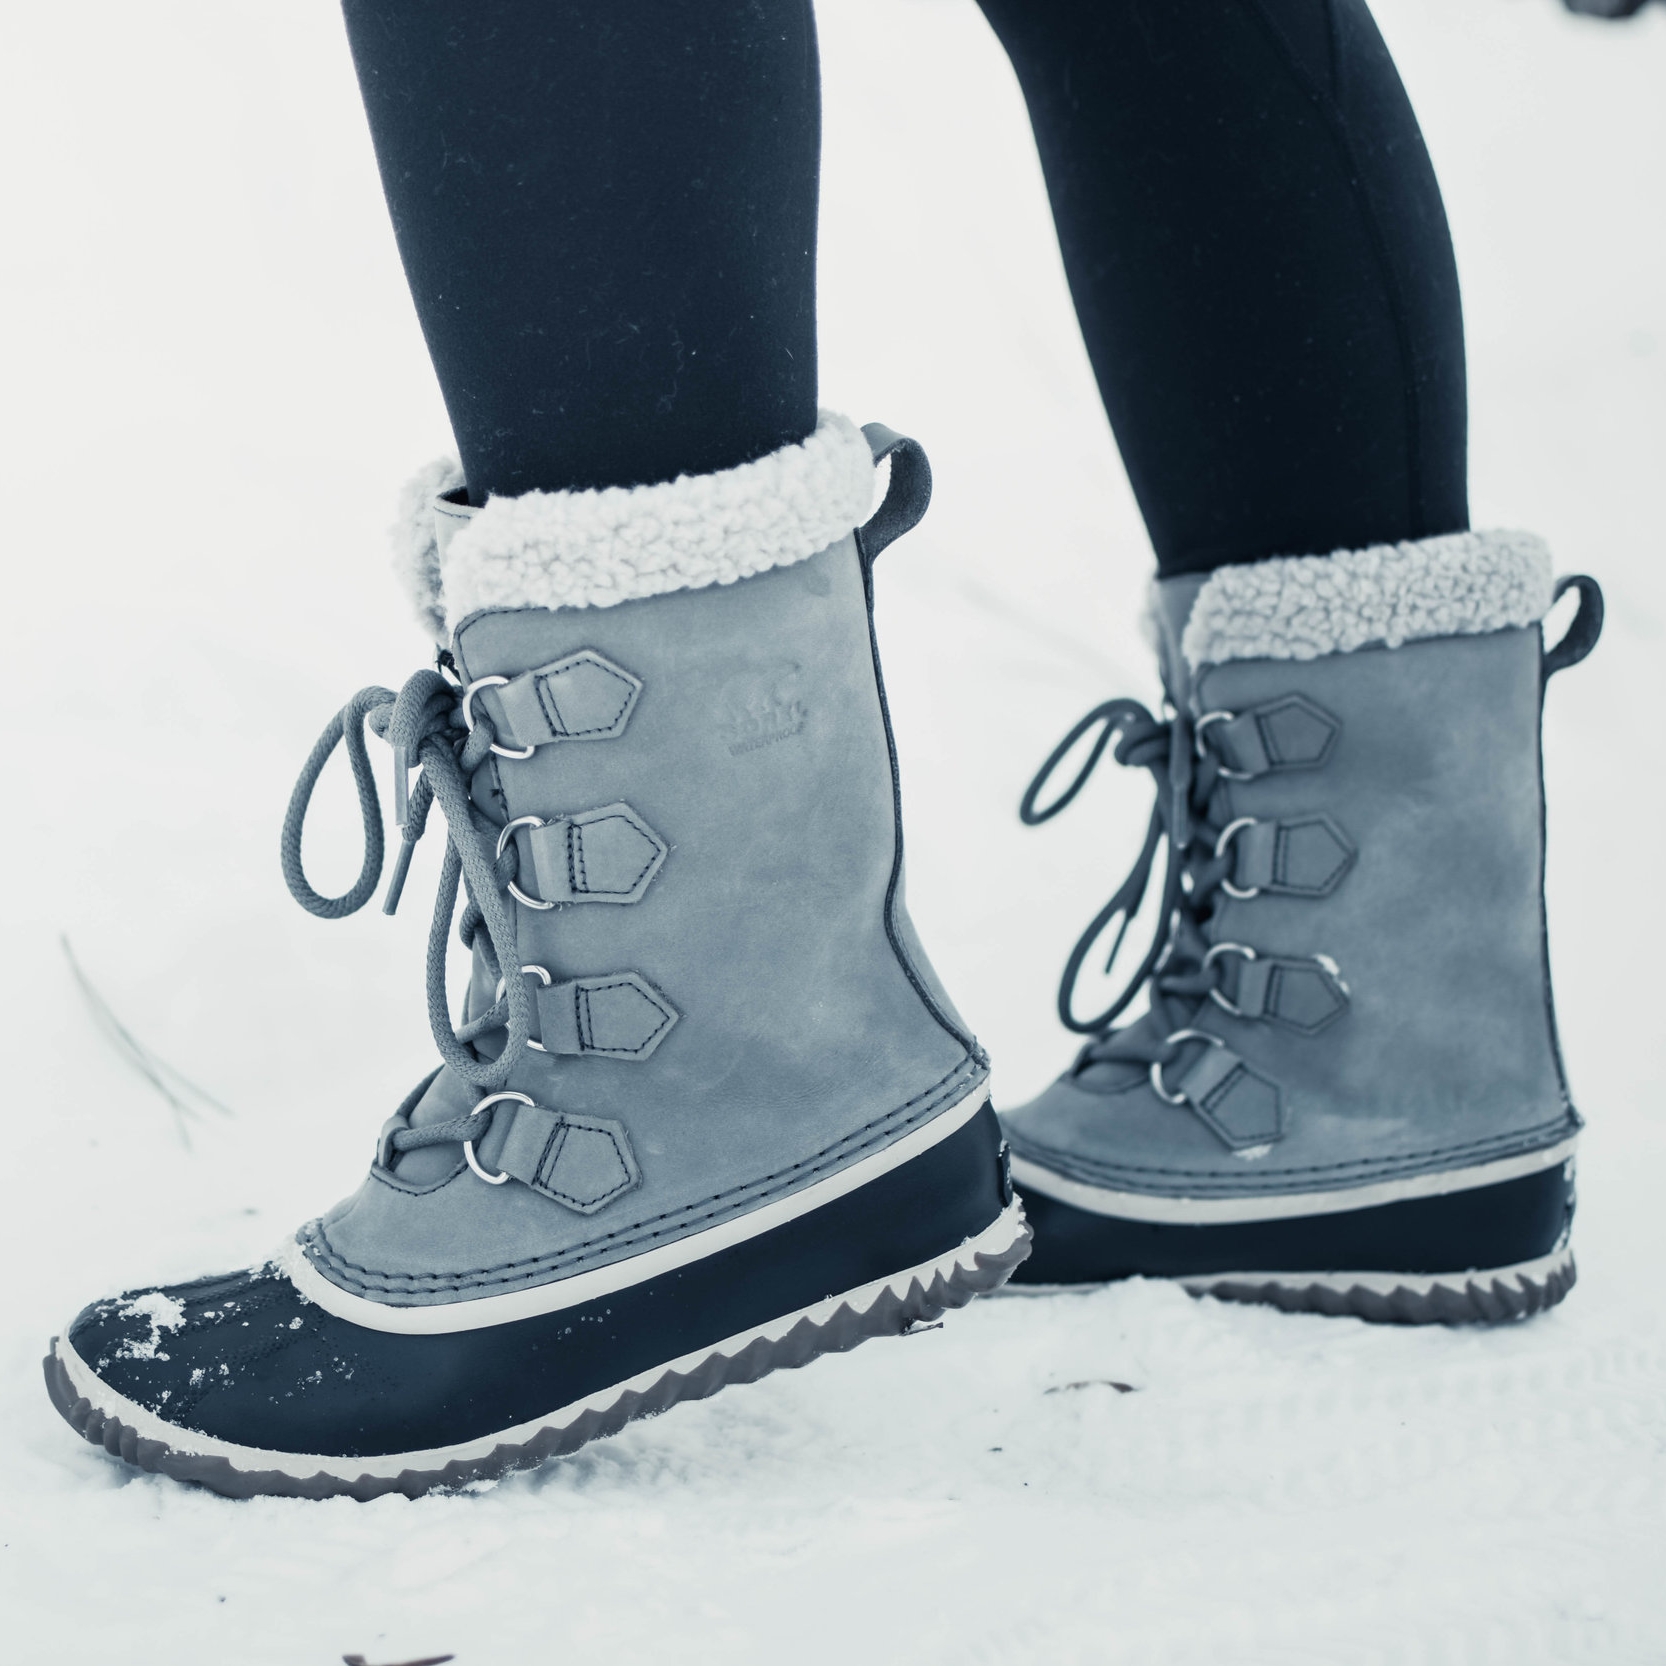 Sorel Caribou Slim Boots Review | megan elise